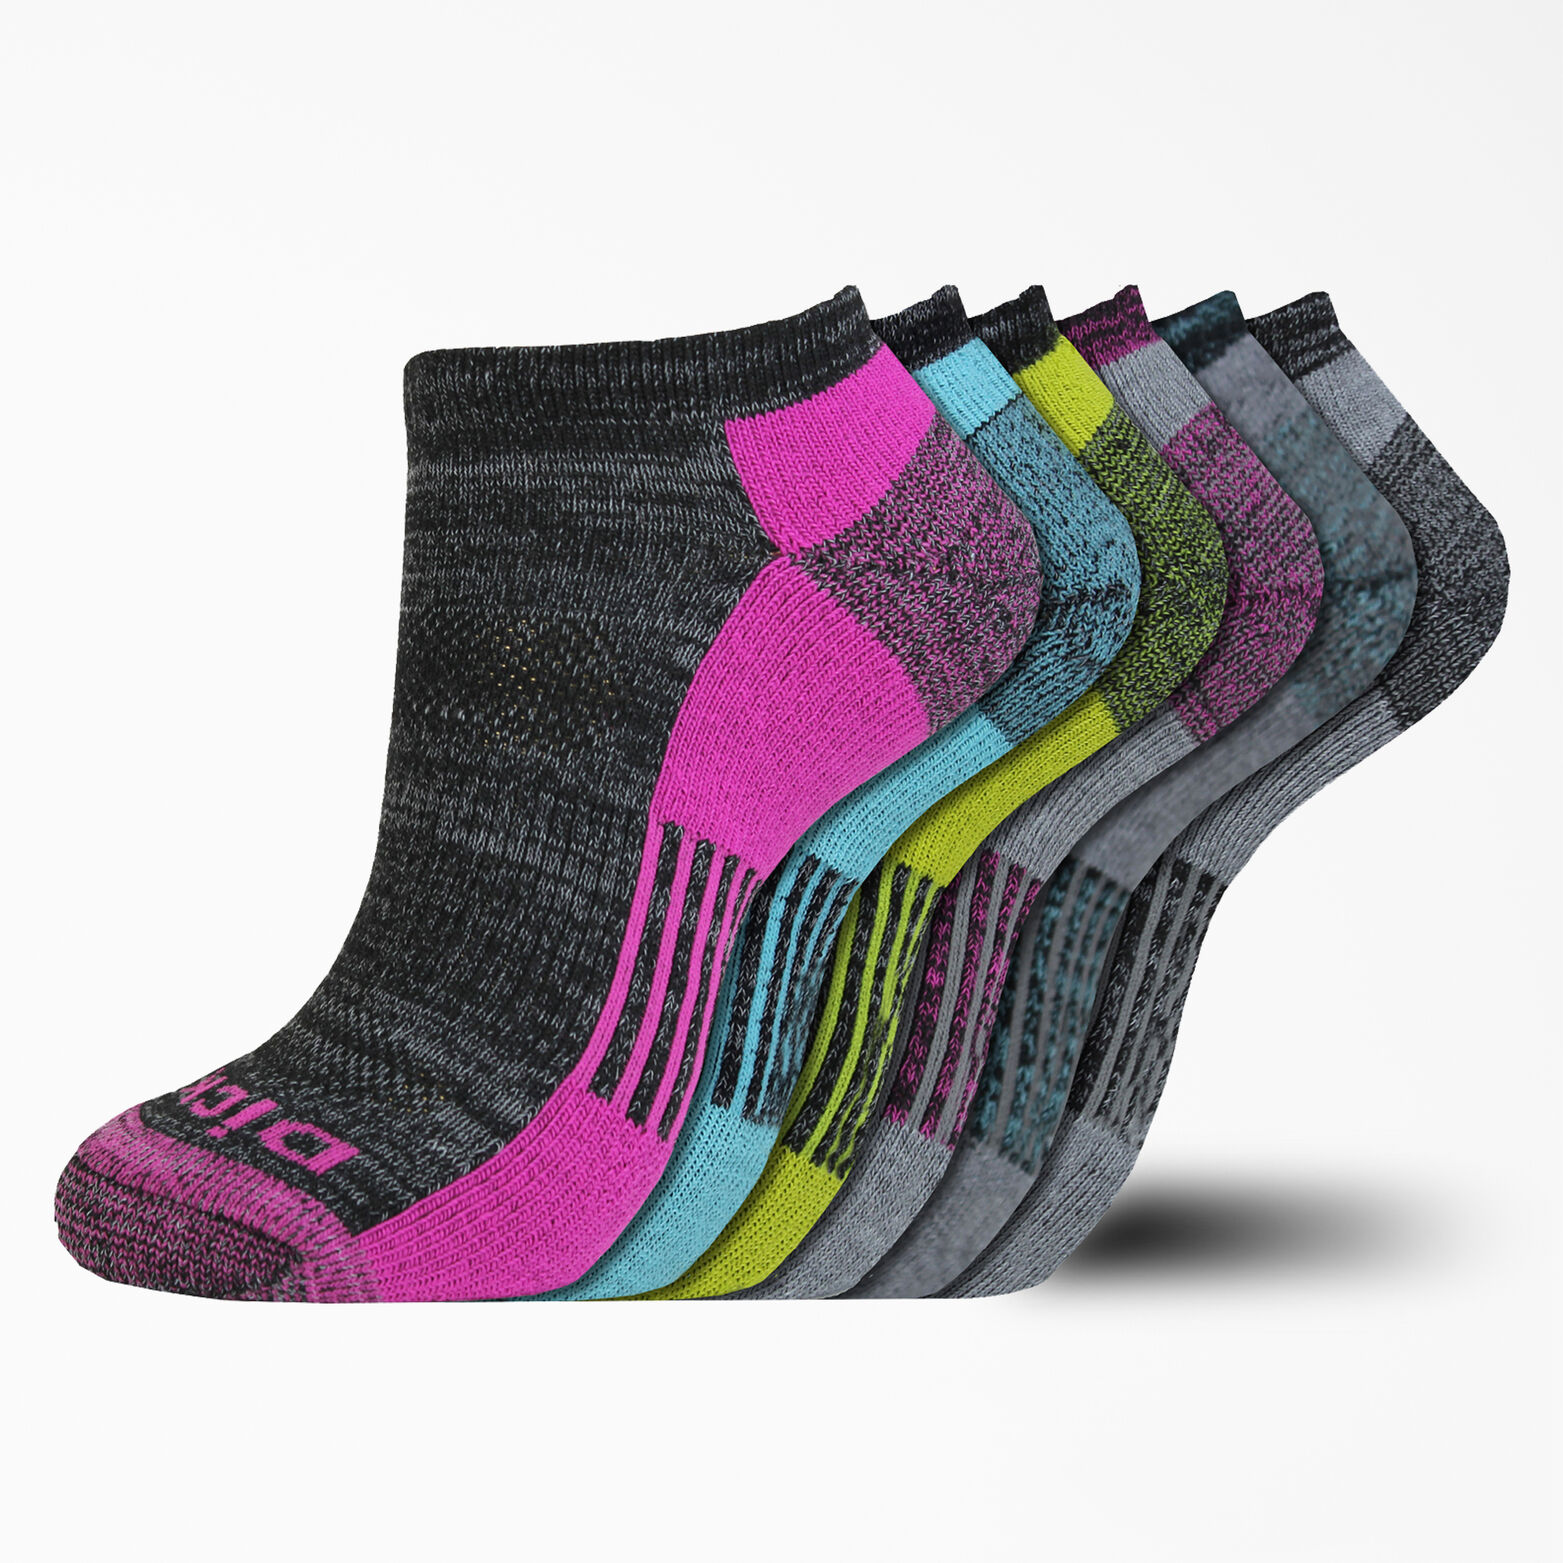 Women's Moisture Control Free Run No Show Socks, Size 6-9, 6-Pack - Dickies  US